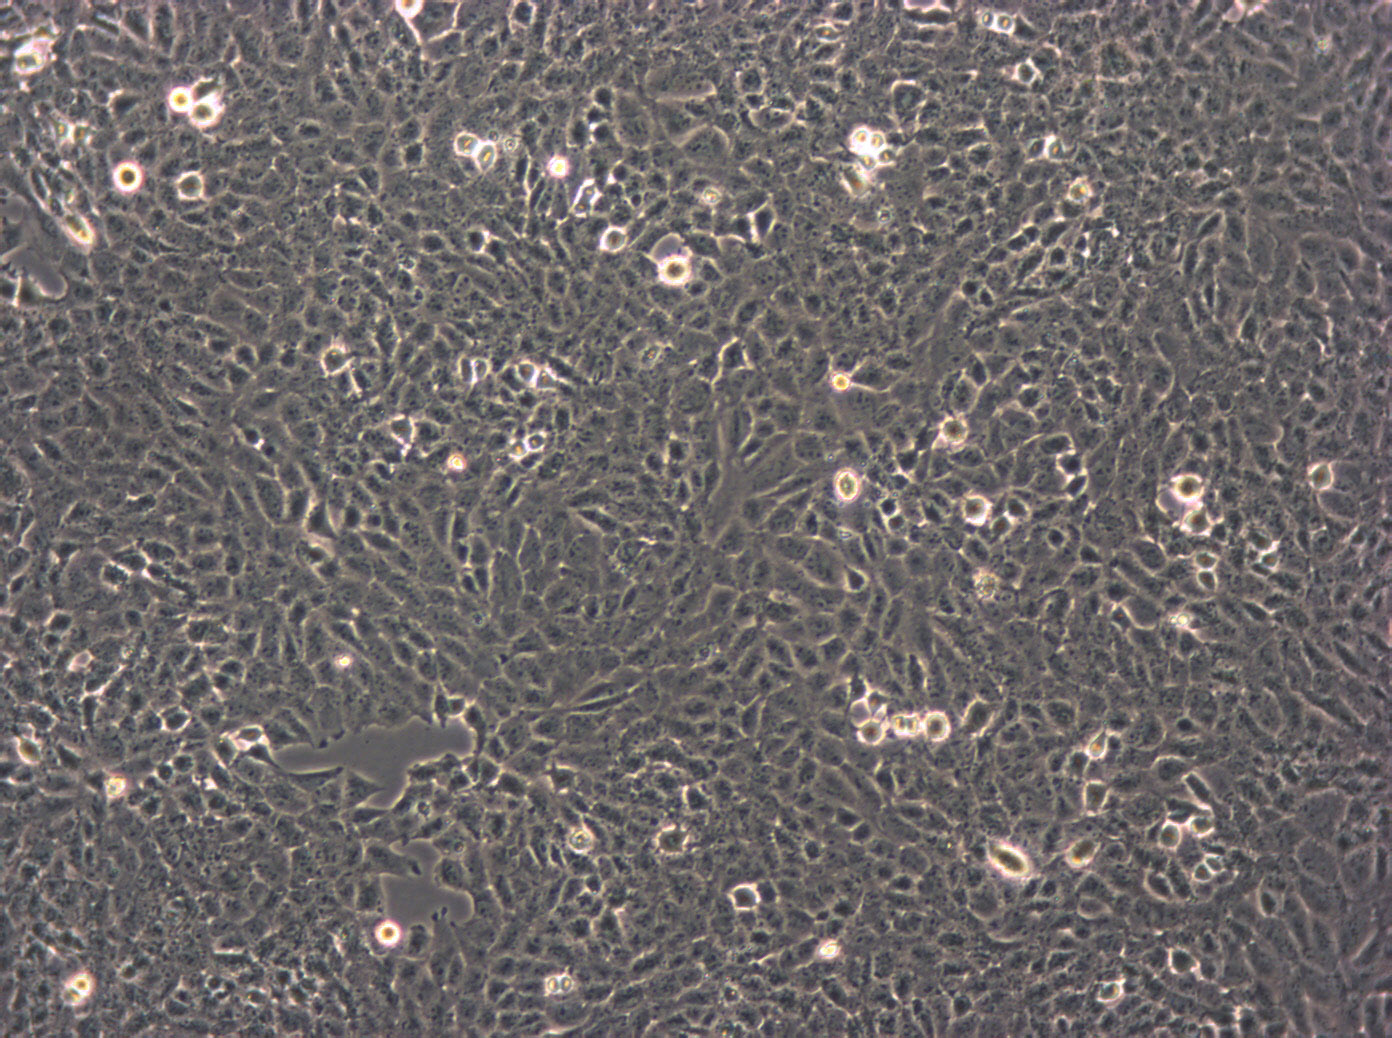 MDA-MB-436 cell line人乳腺癌细胞系,MDA-MB-436 cell line